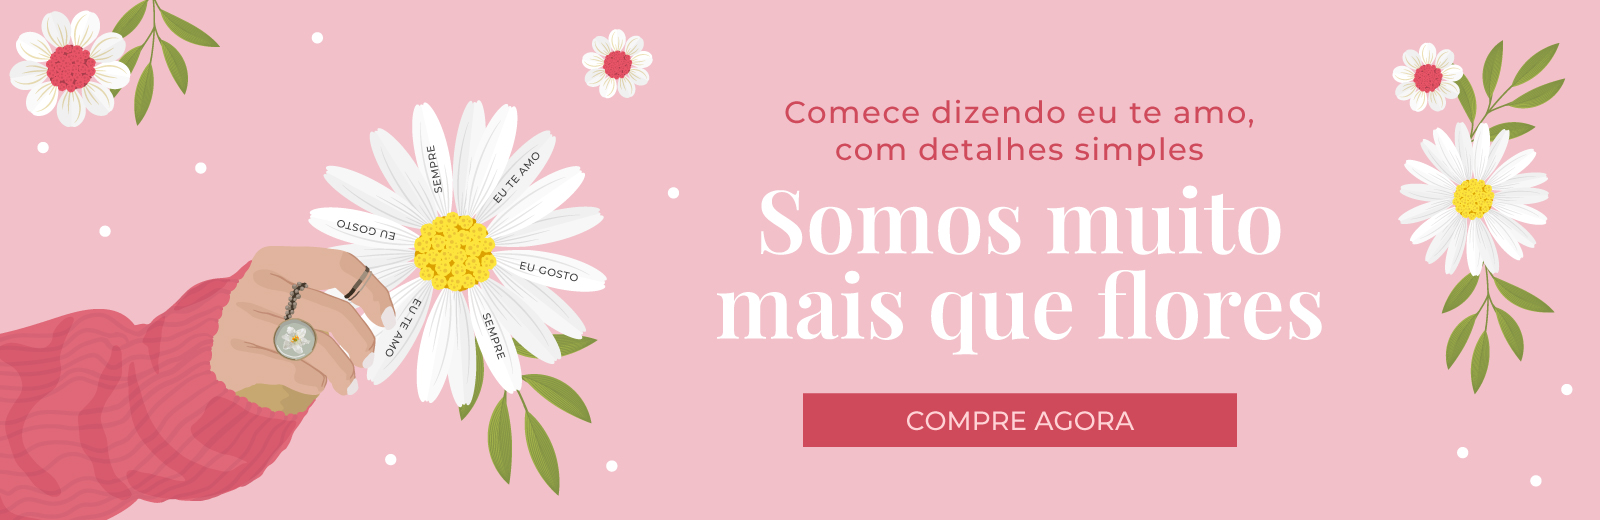 Flores Online